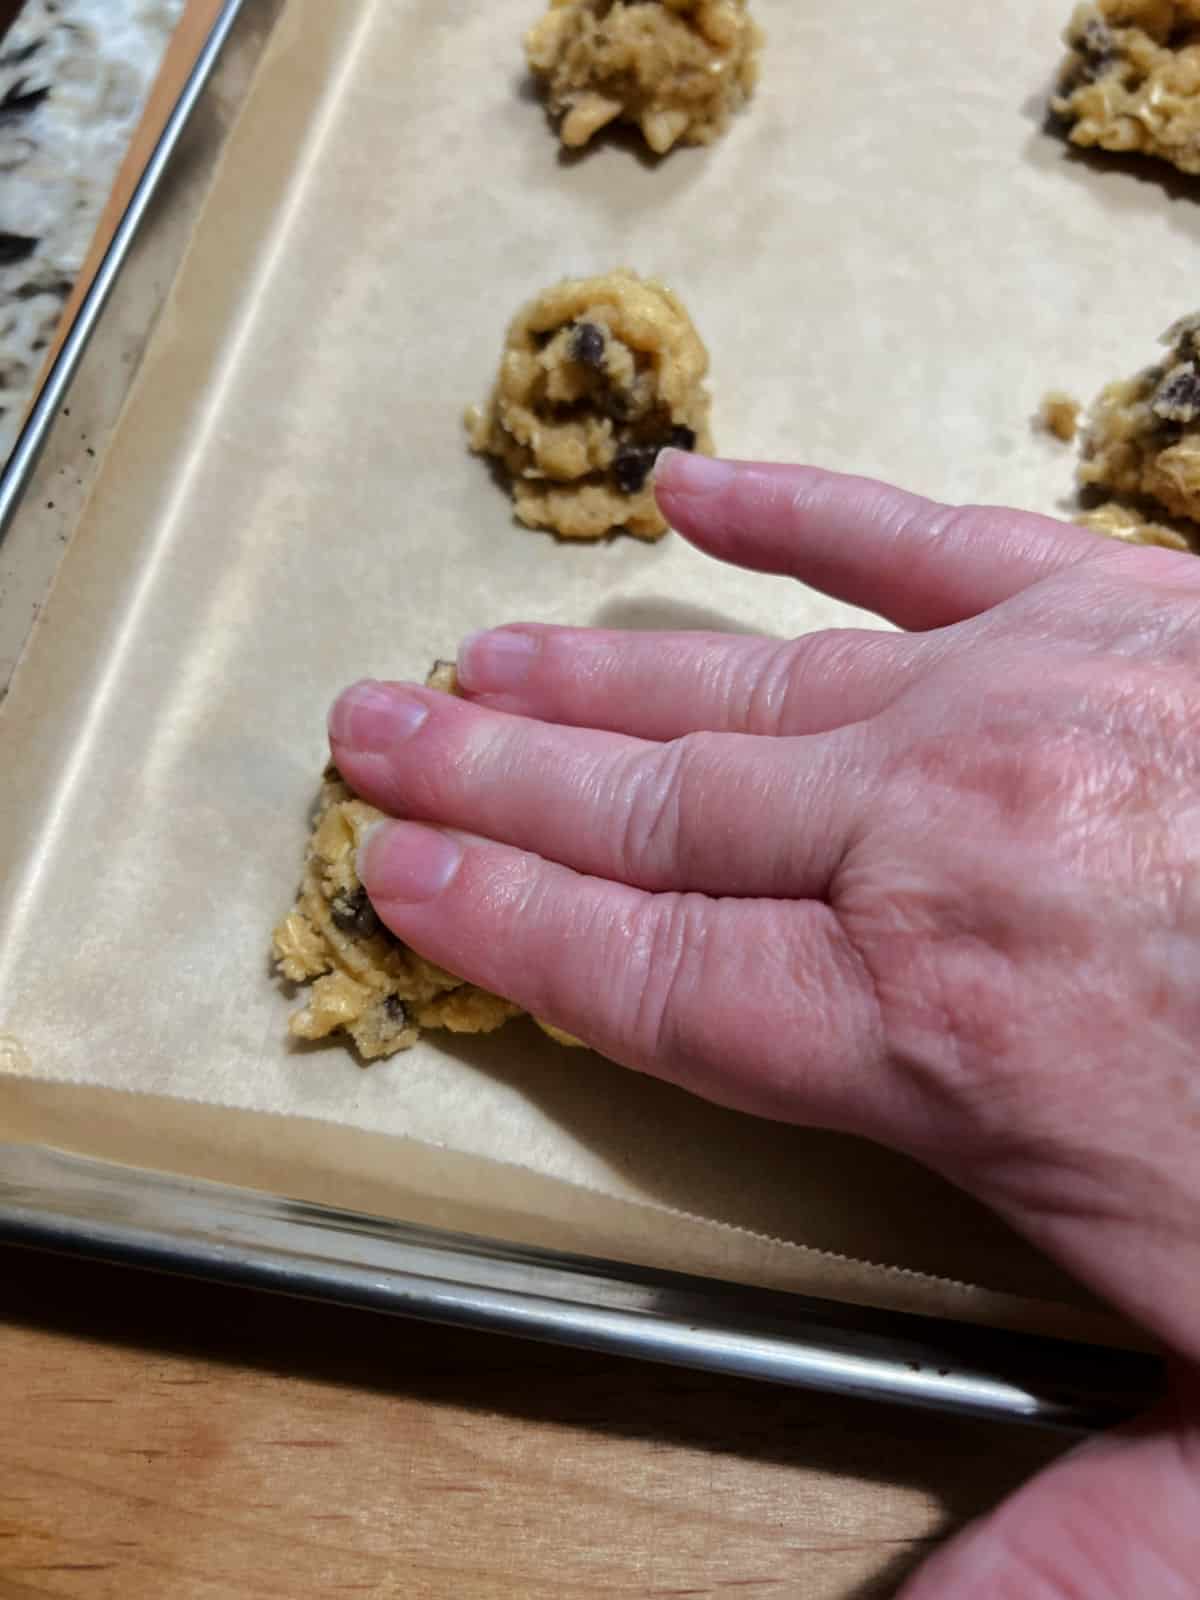 flattening the ball of dough slightly on the baking sheet.